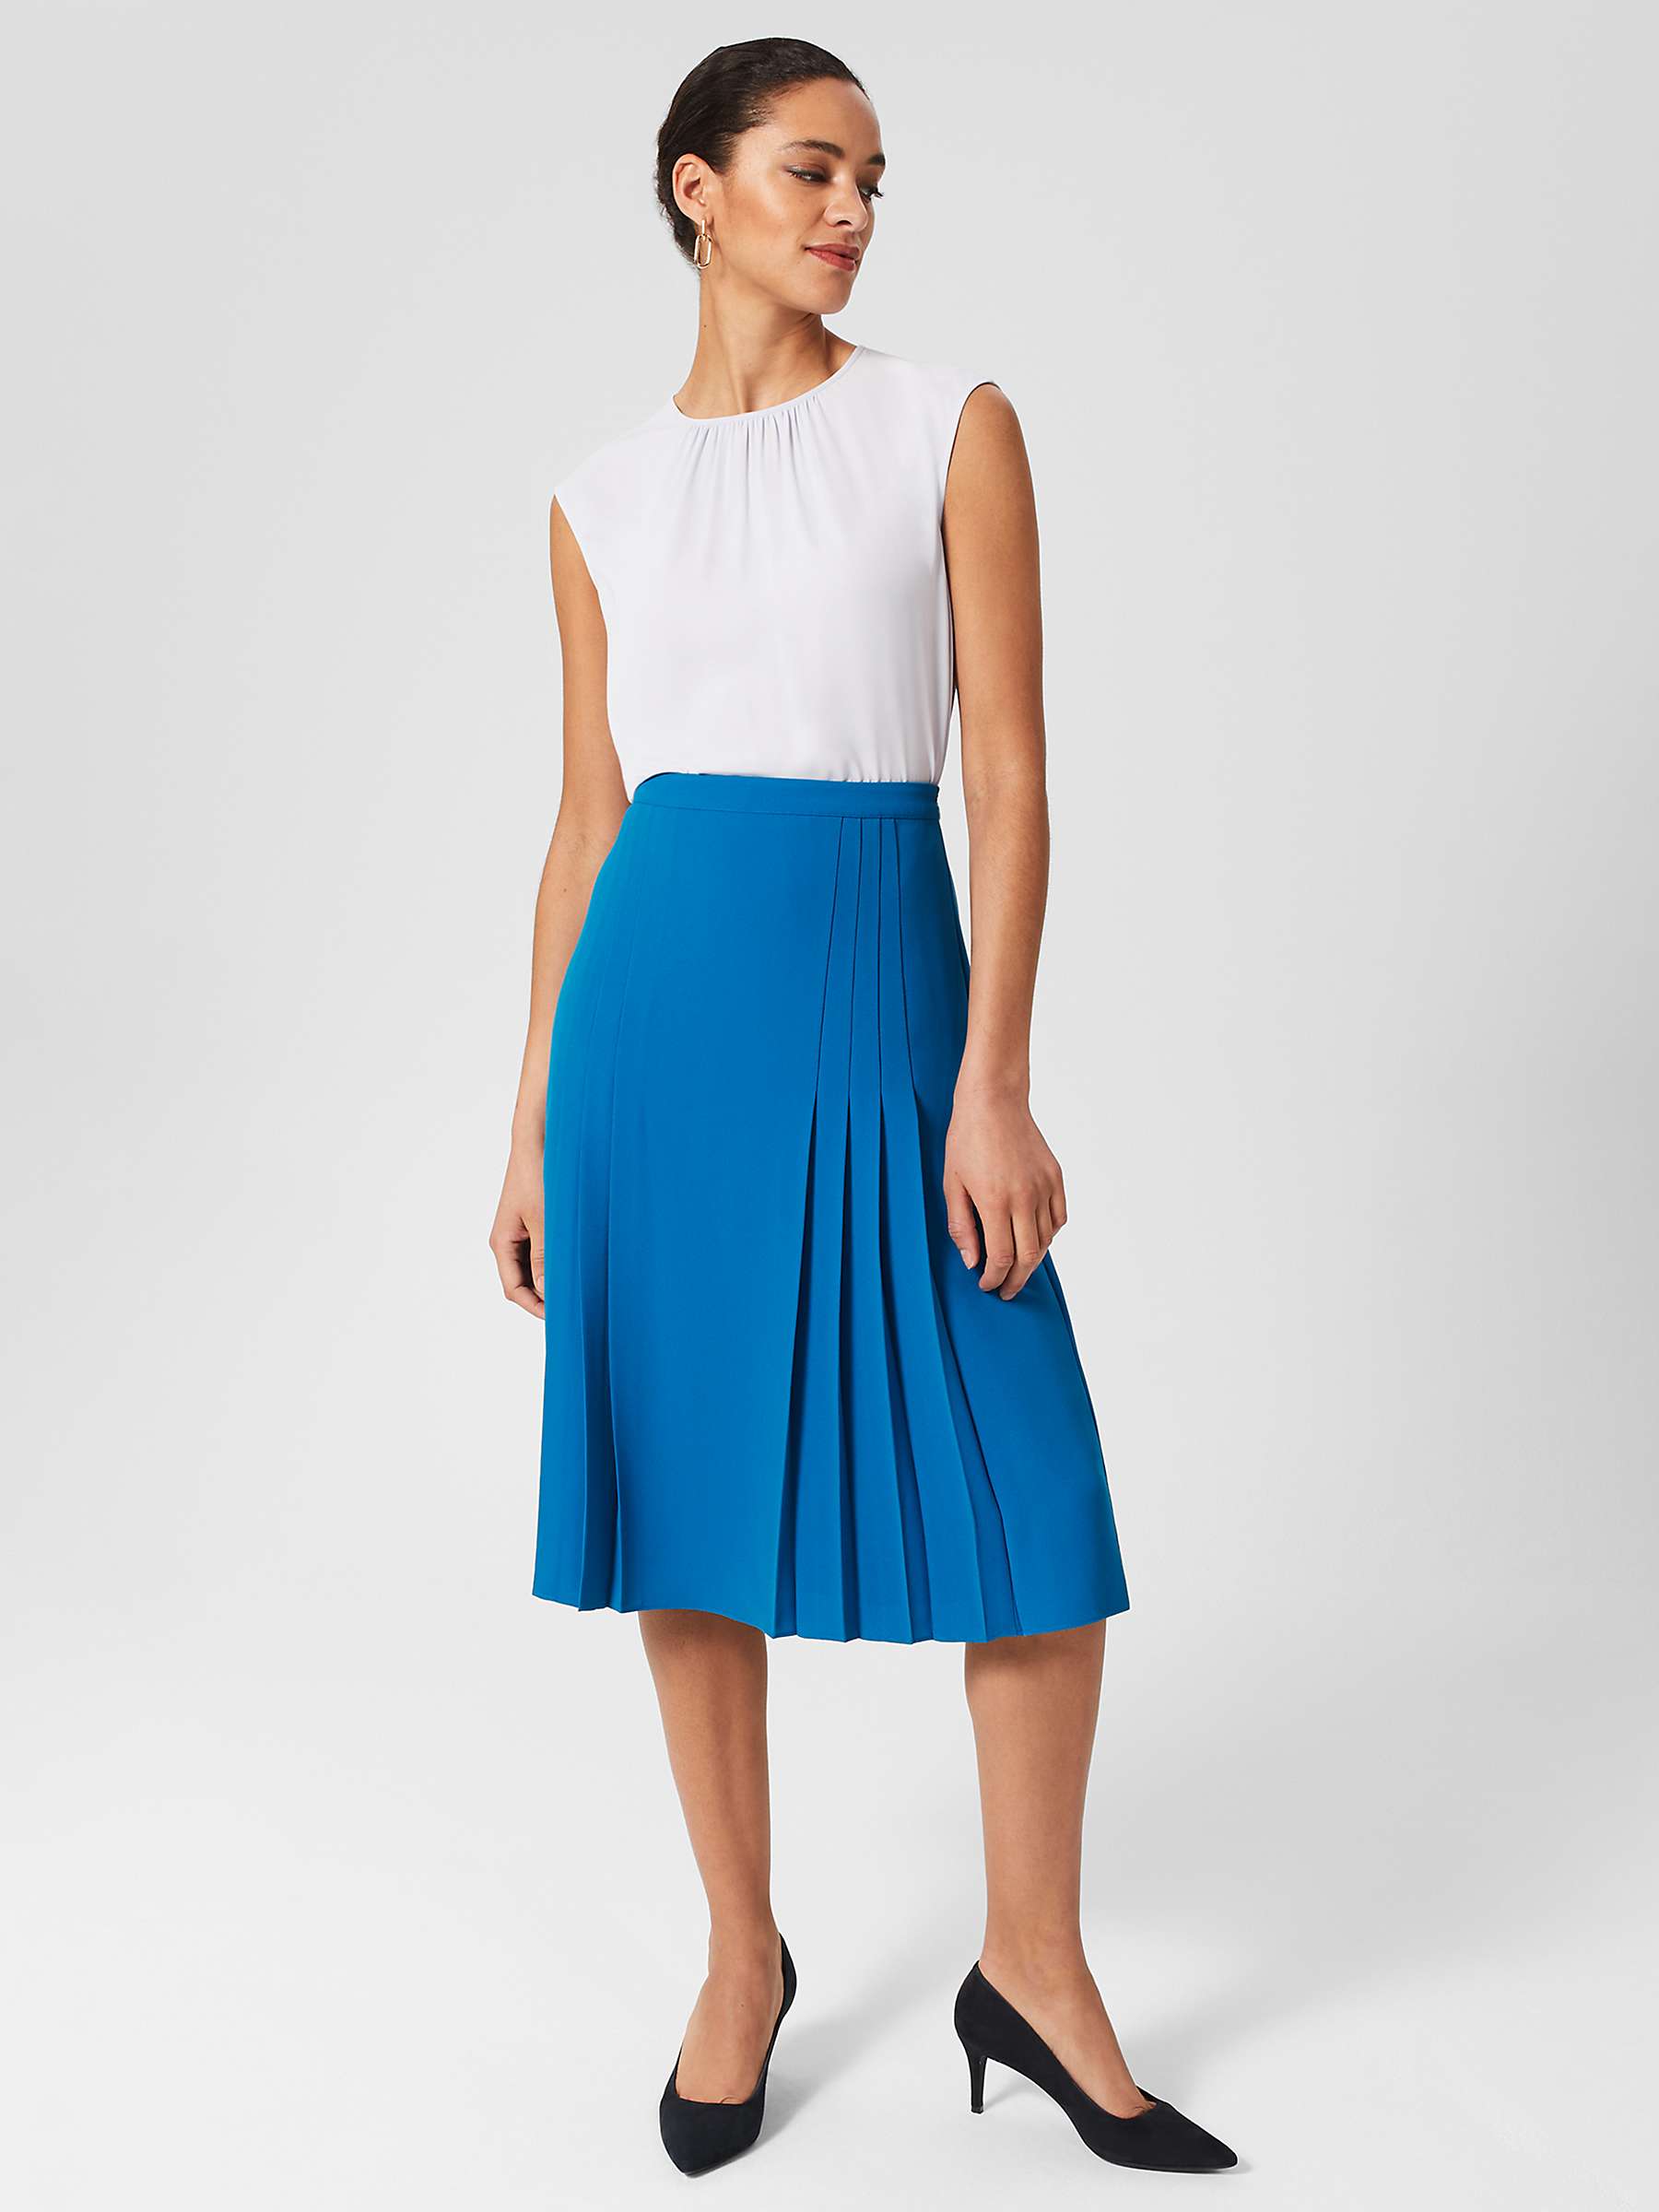 Hobbs Everleigh Skirt, Imperial Blue at John Lewis & Partners